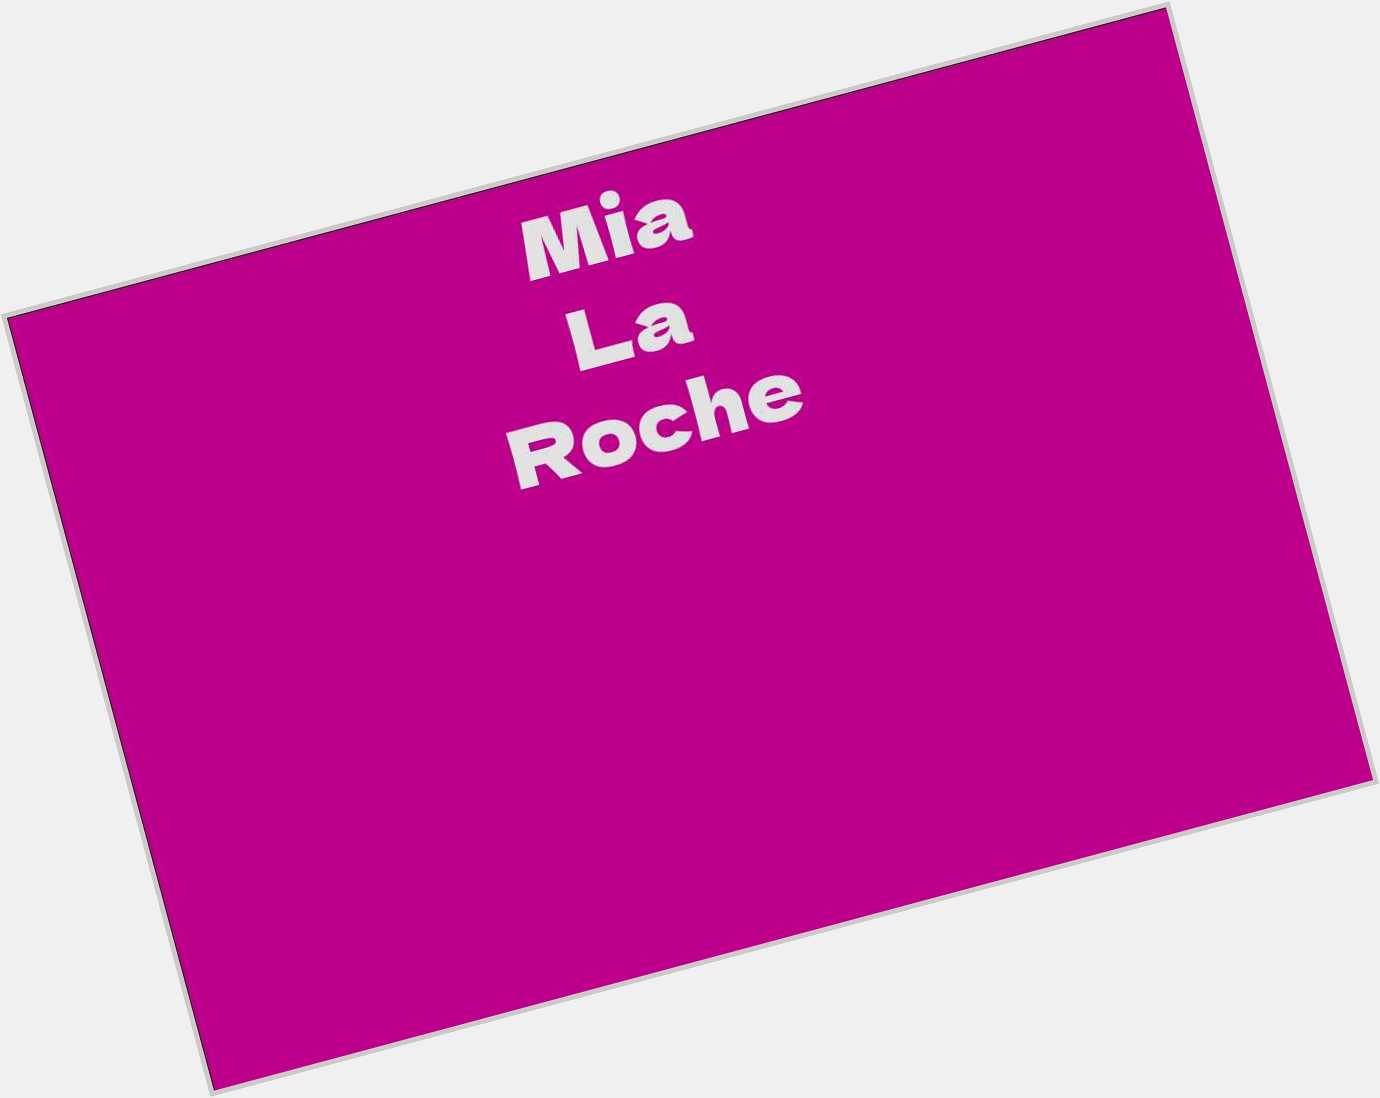 Mia La Roche shirtless bikini